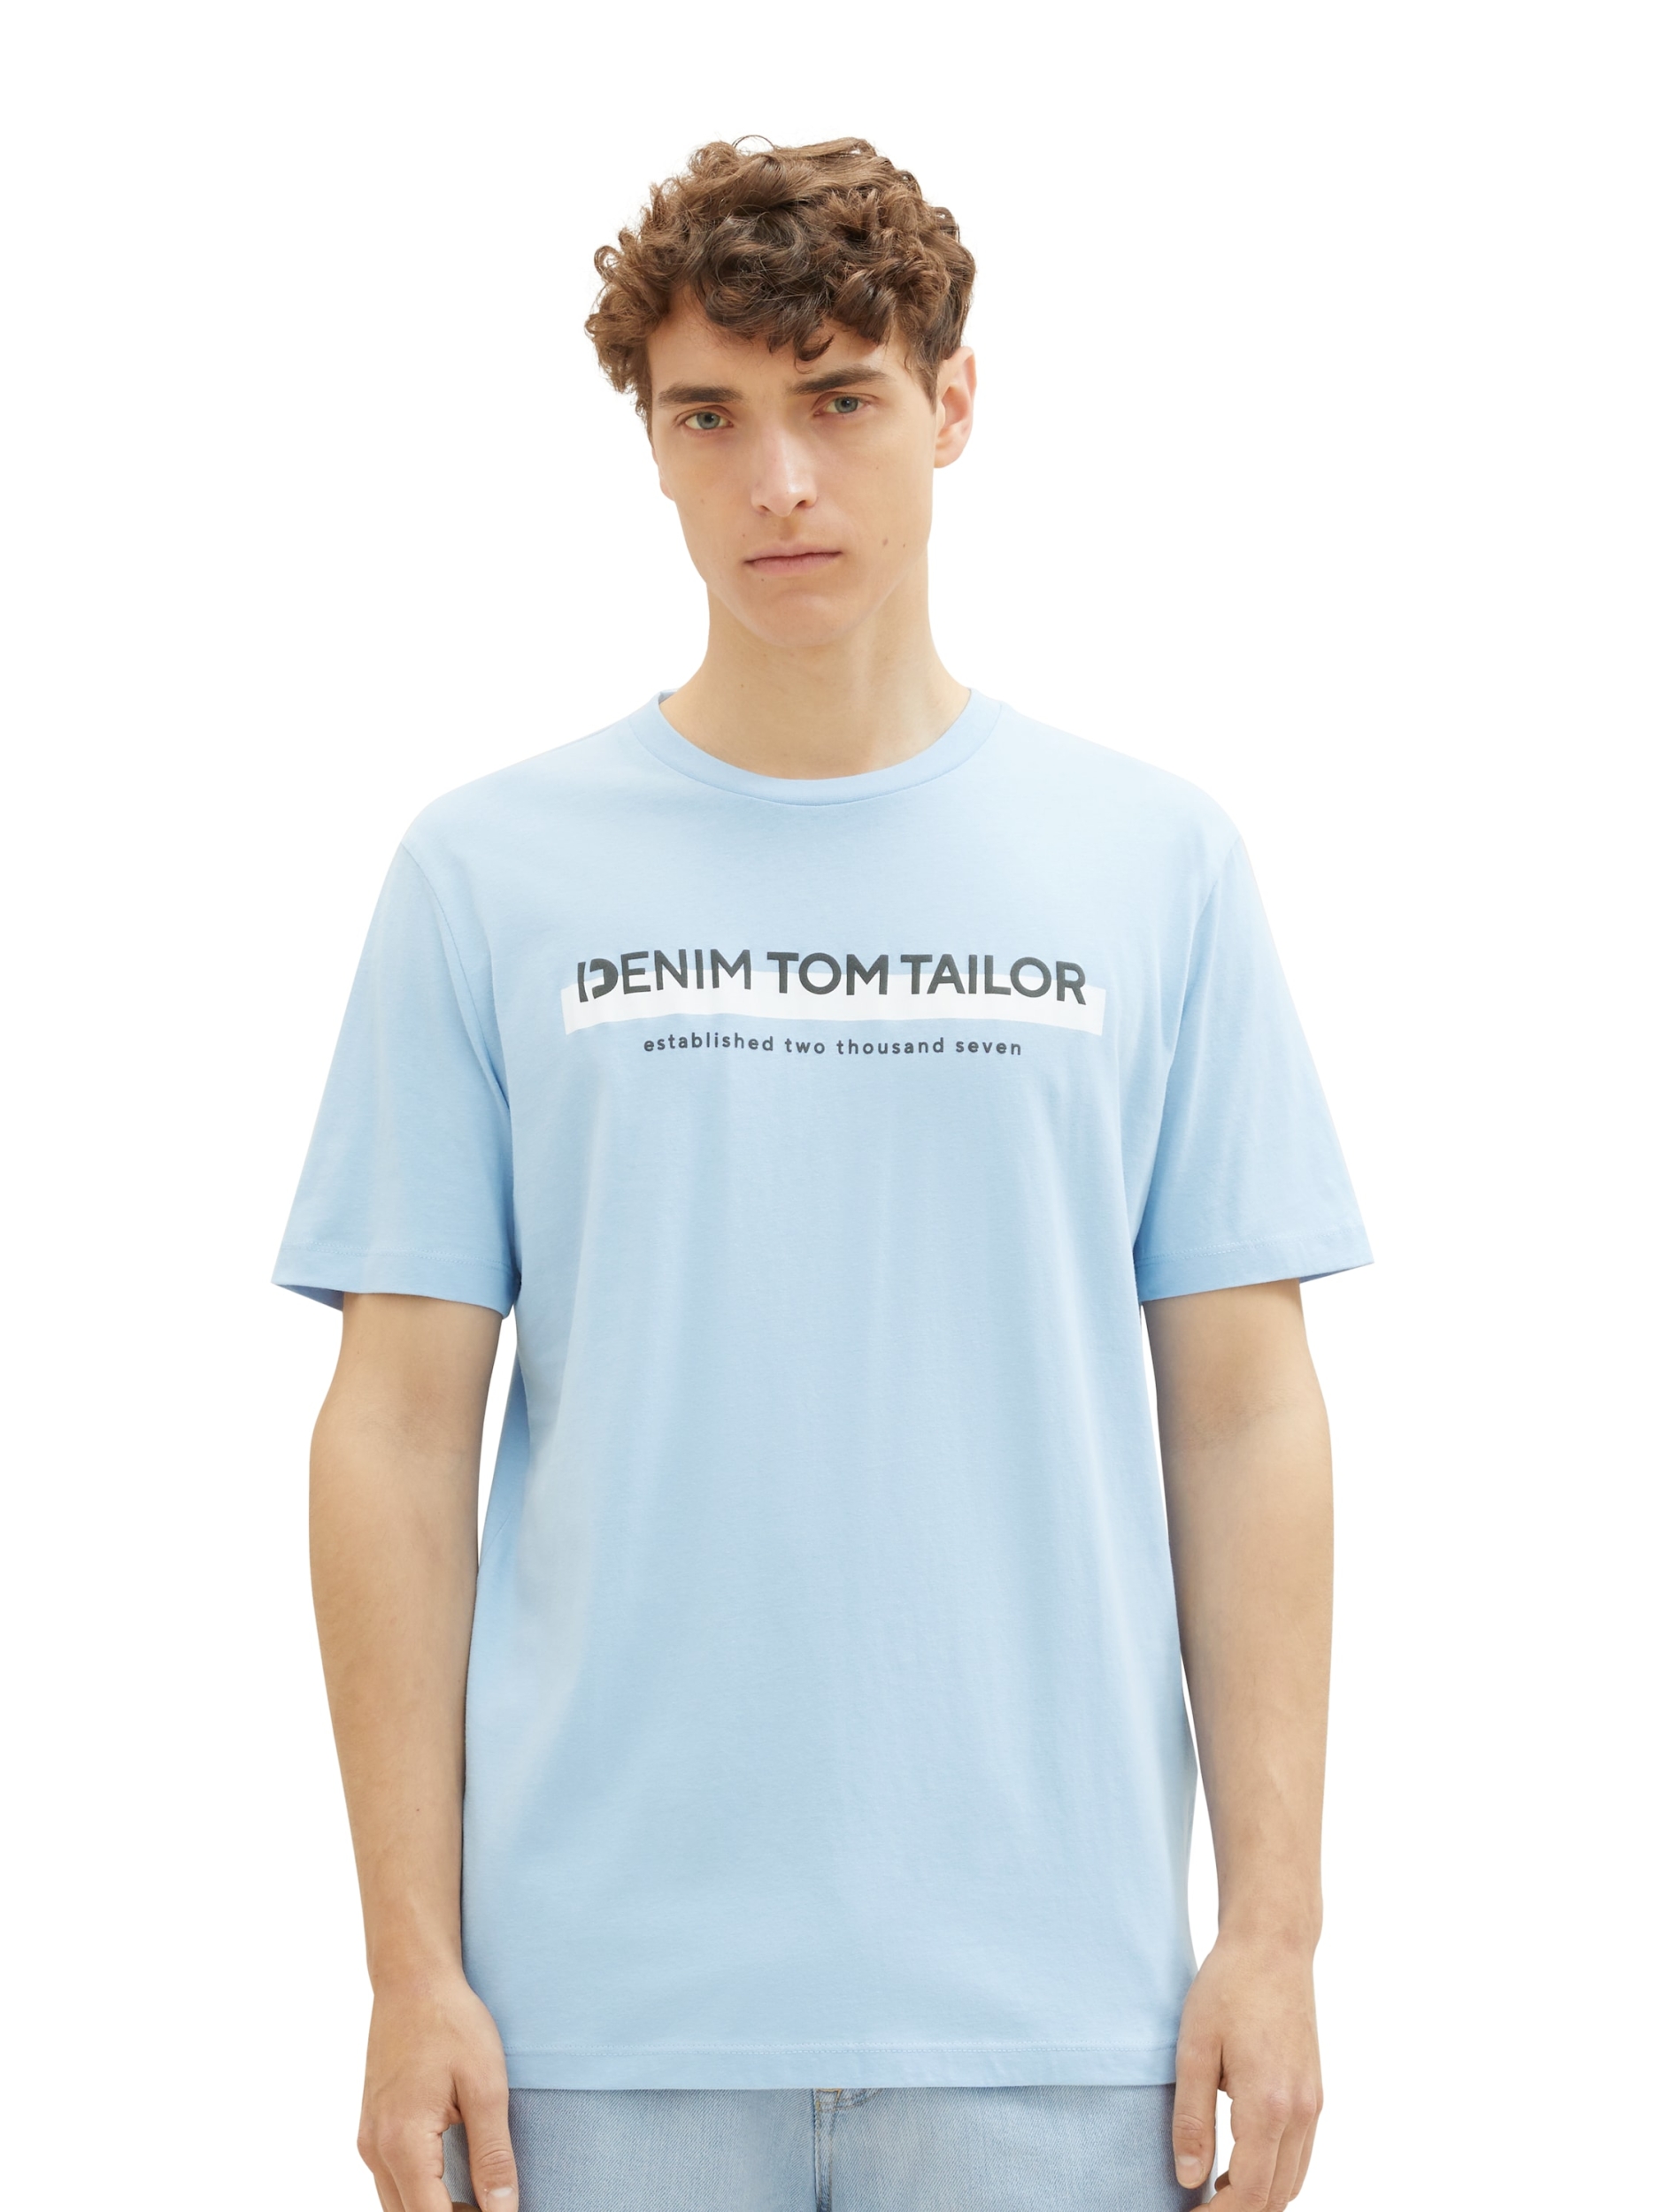 TOM TAILOR printed online kaufen t-shirt